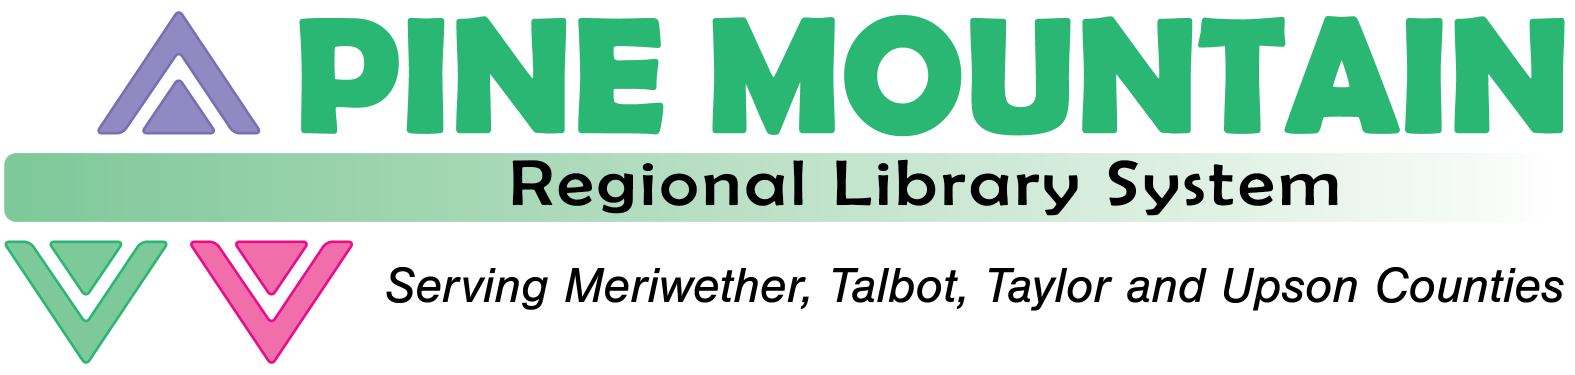 Pine Mountain Regional Library System logo